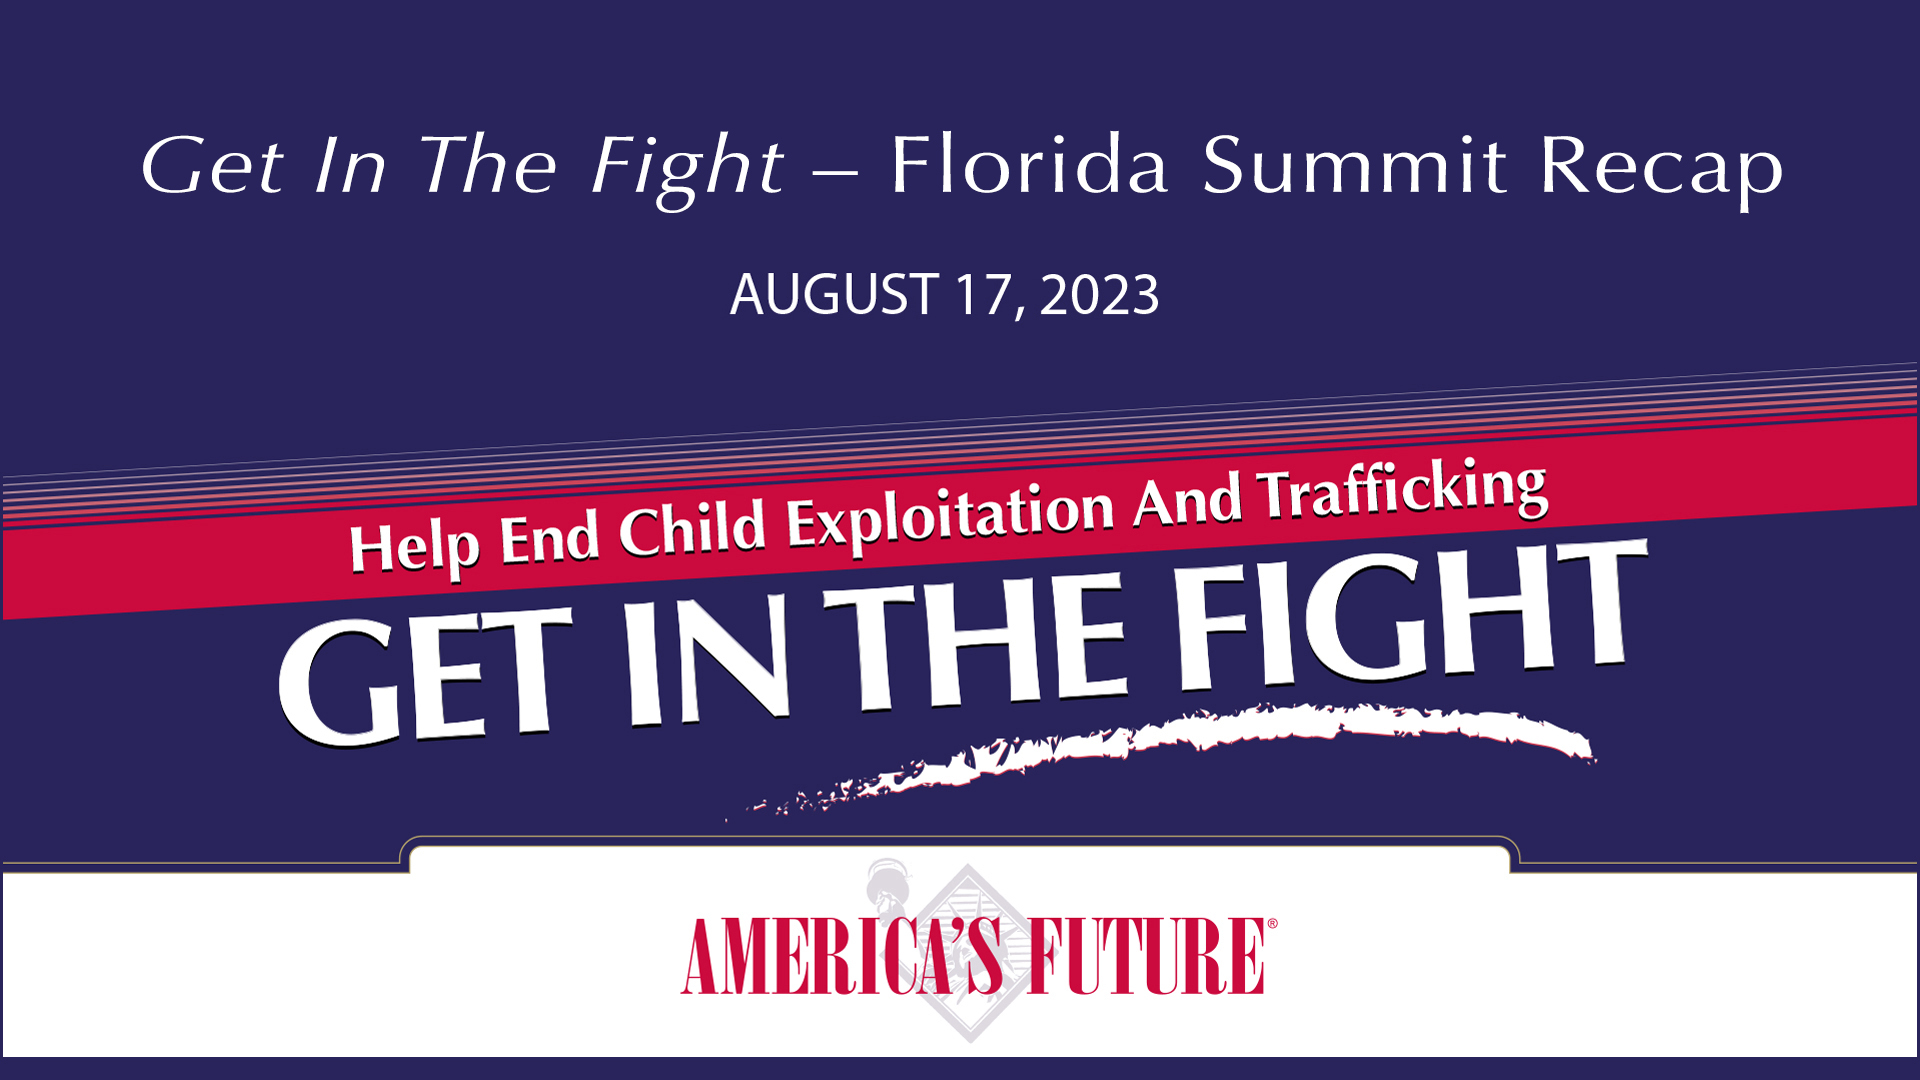 Get In The Fight – Florida Summit Recap Video